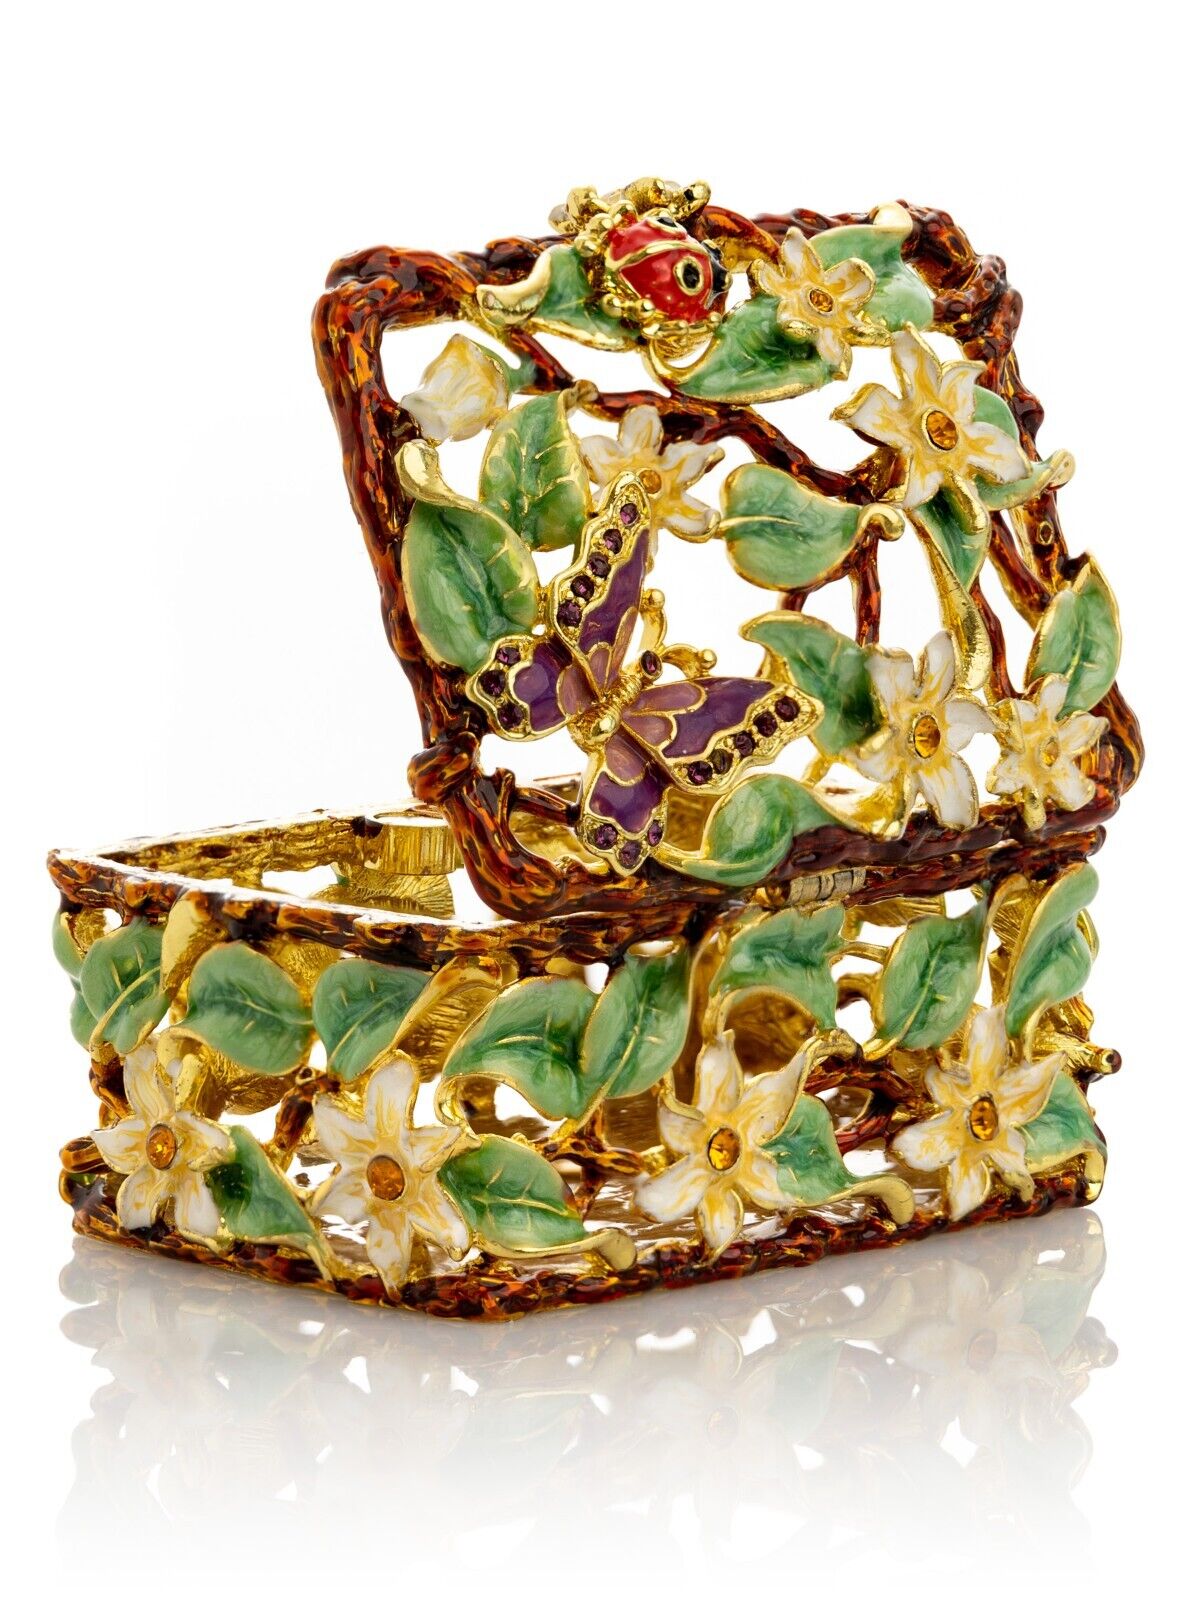 Keren Kopal Flowers hand made  Trinket Box Decorated with Austrian Crystals